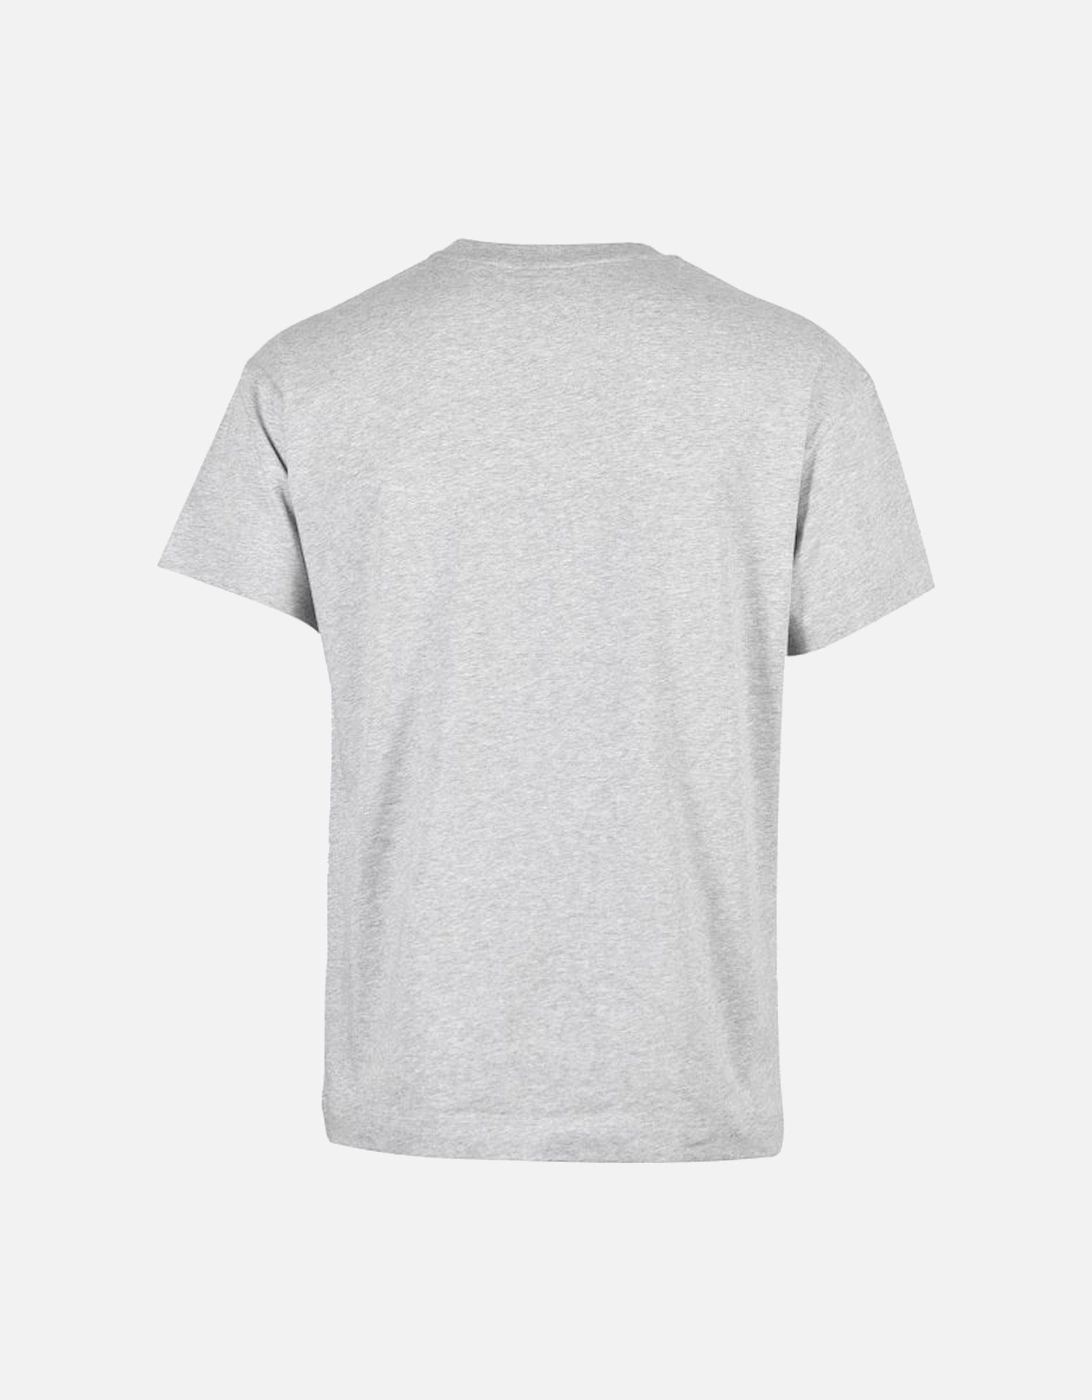 Linked T-Shirt, Medium Grey Melange